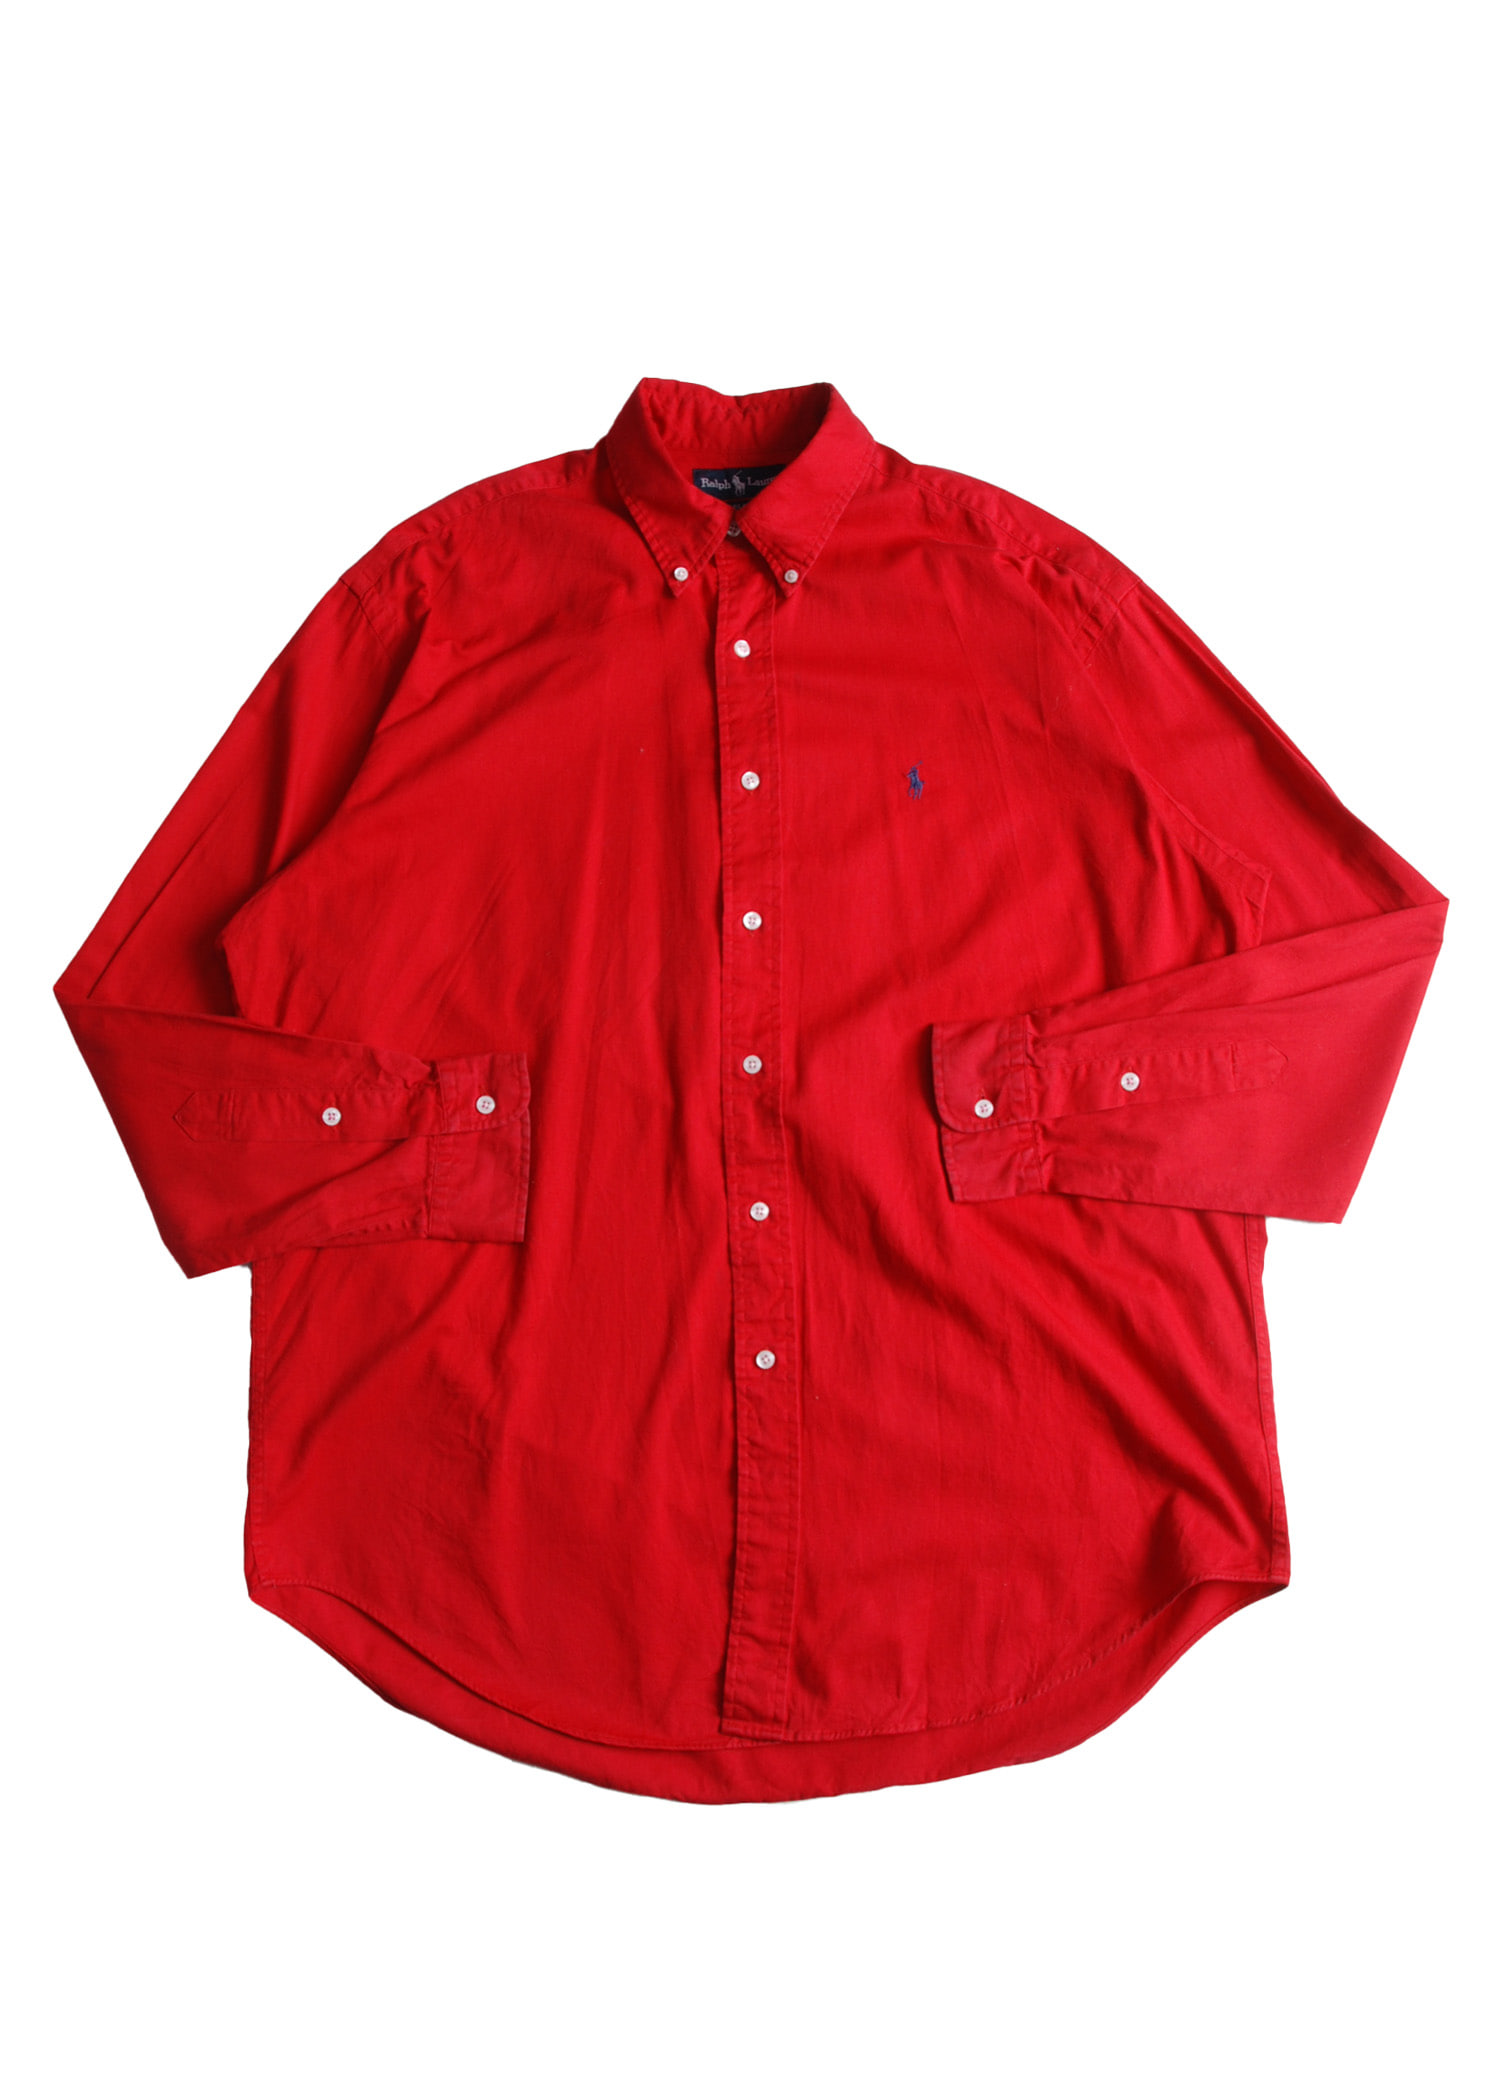 Polo by Ralph Lauren shirts